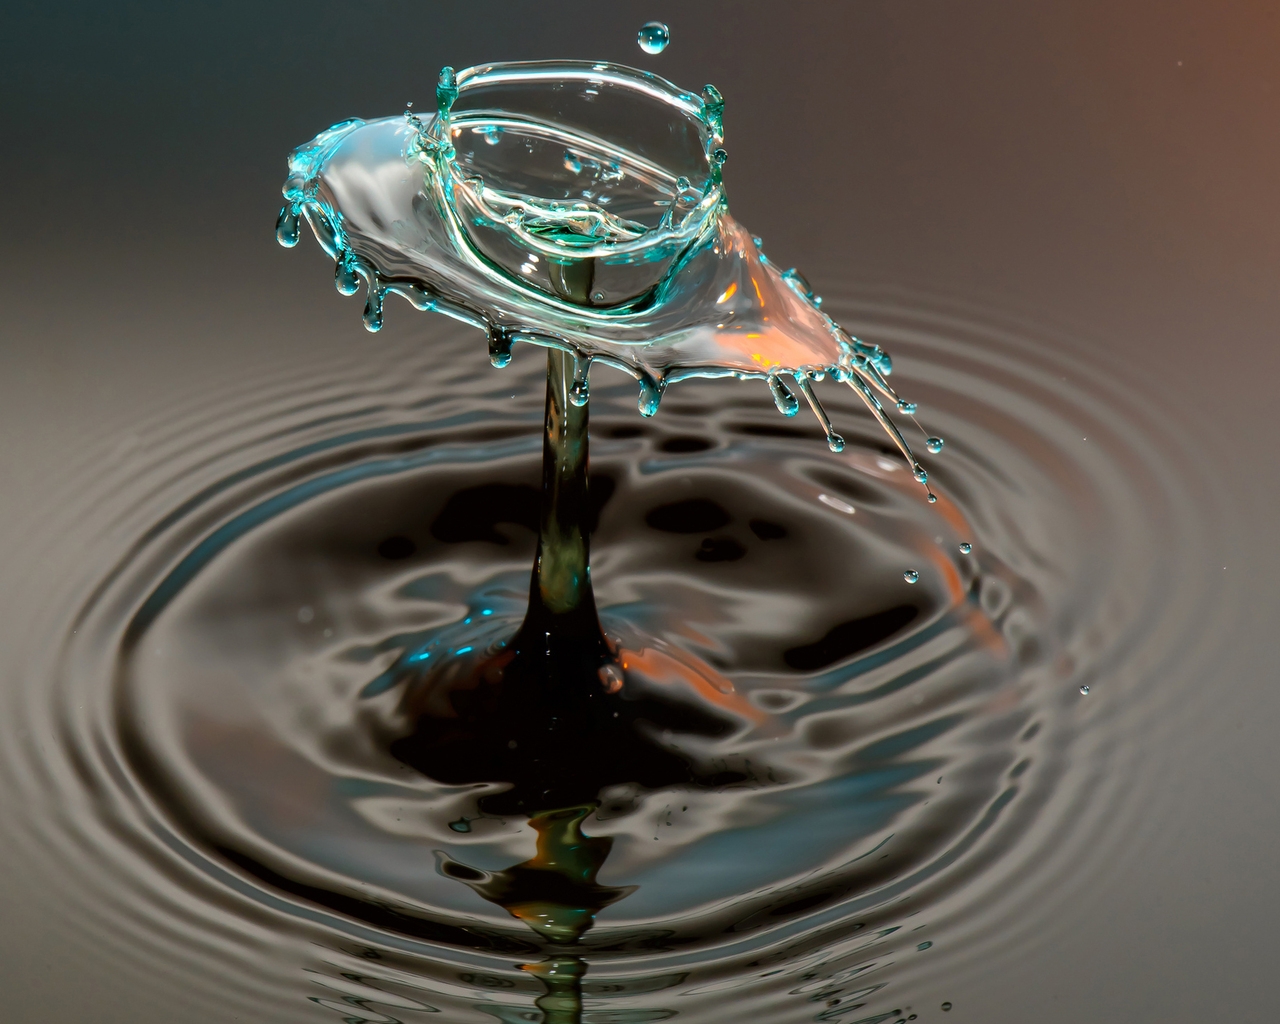 Water Splash for 1280 x 1024 resolution